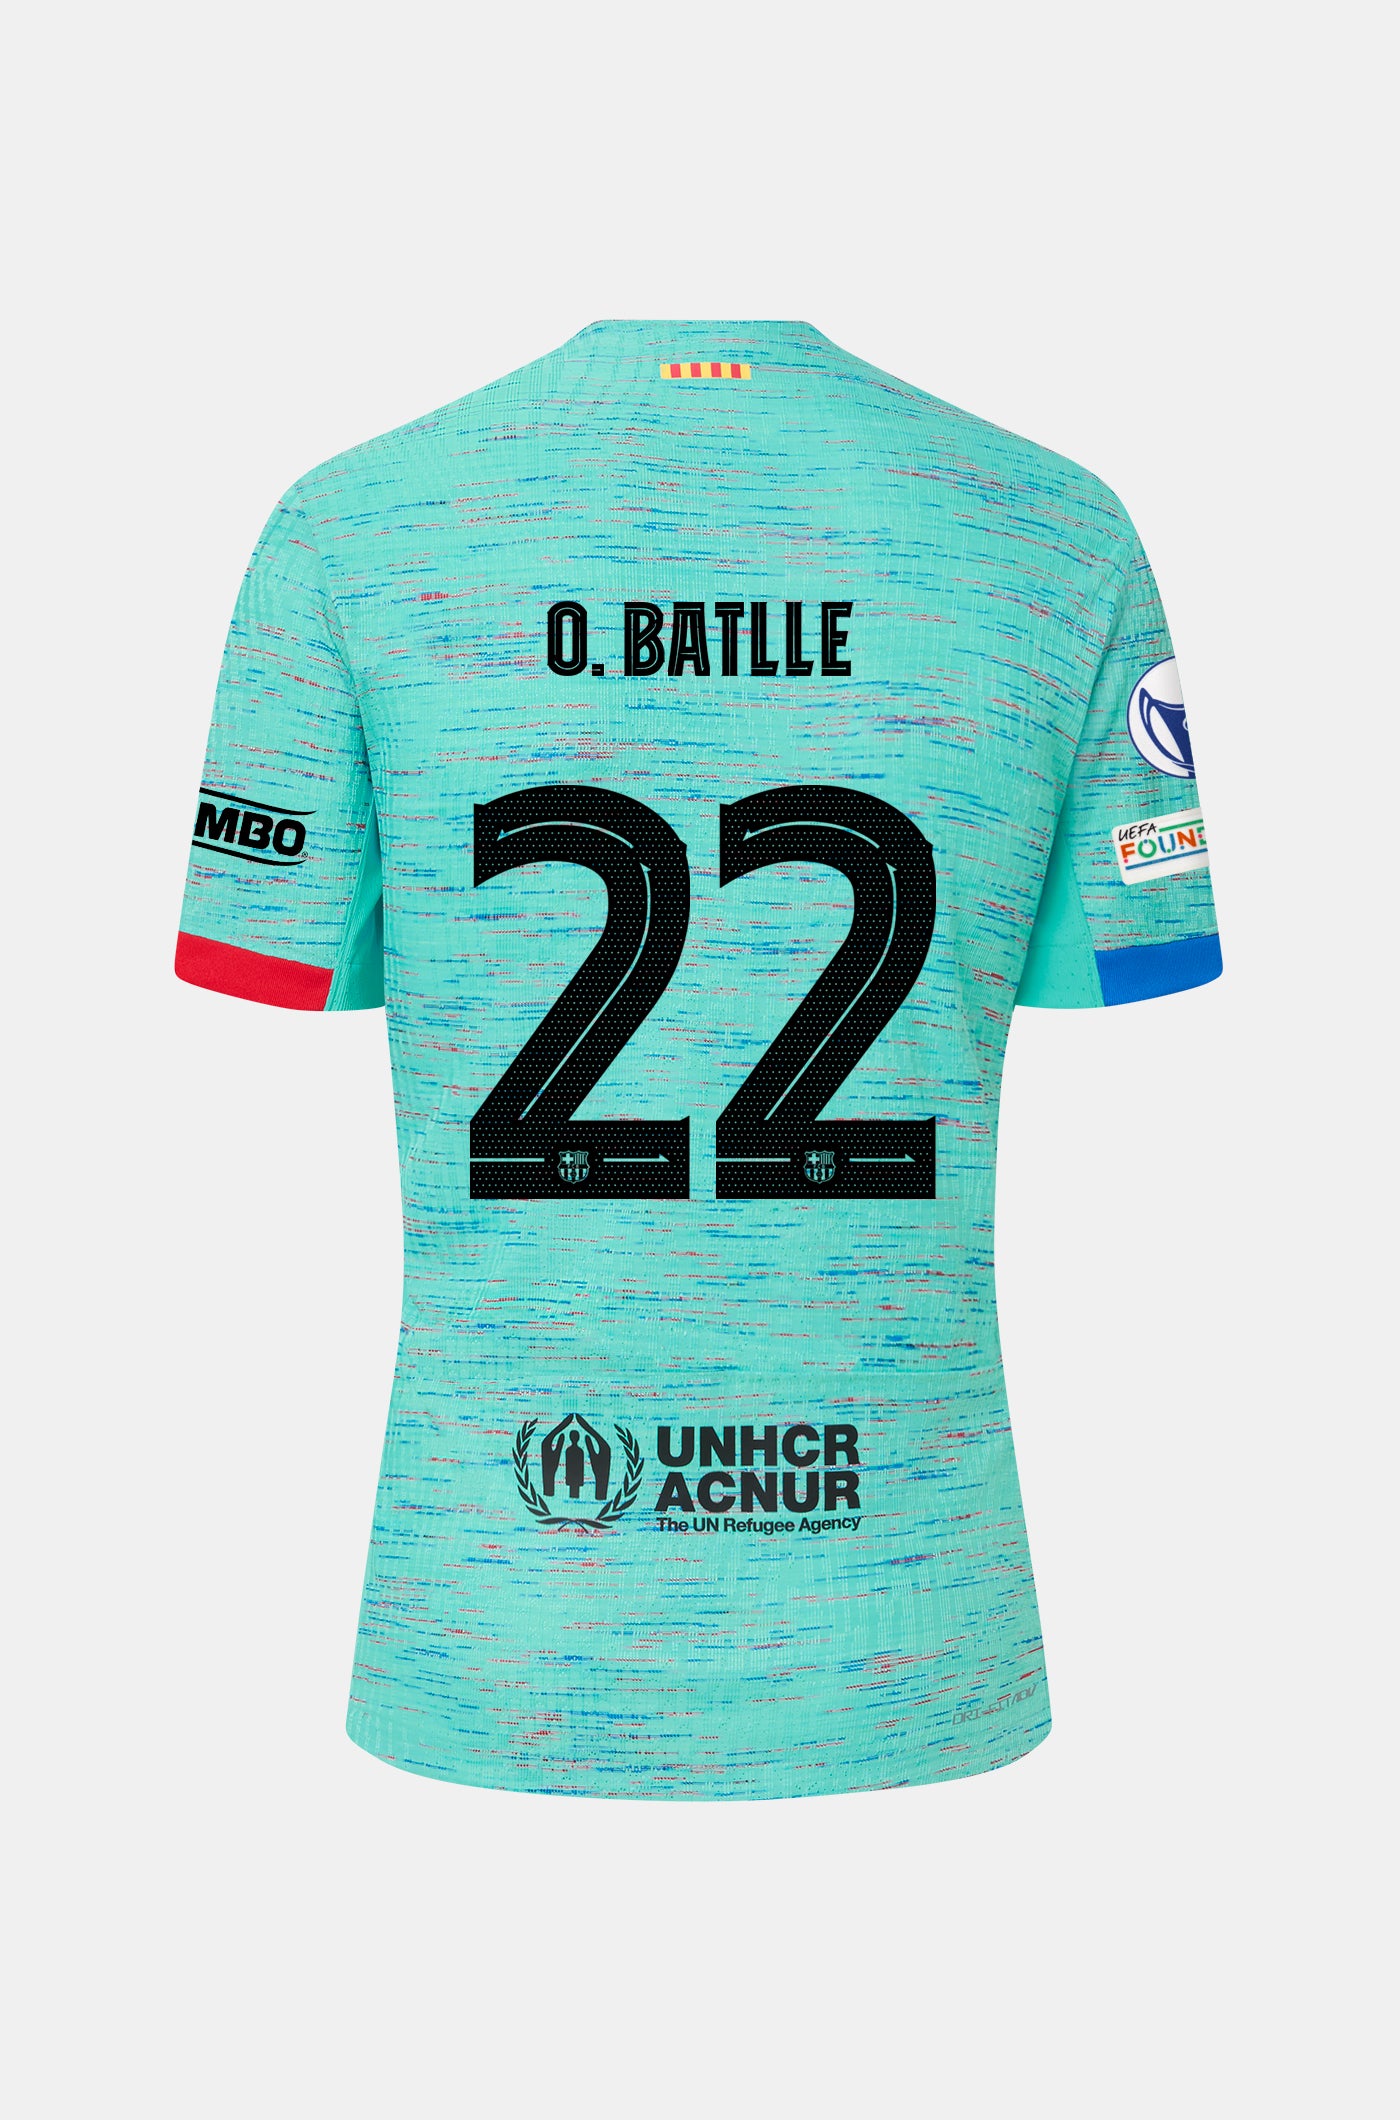 UWCL FC Barcelona third shirt 23/24 Player's Edition - O. BATLLE